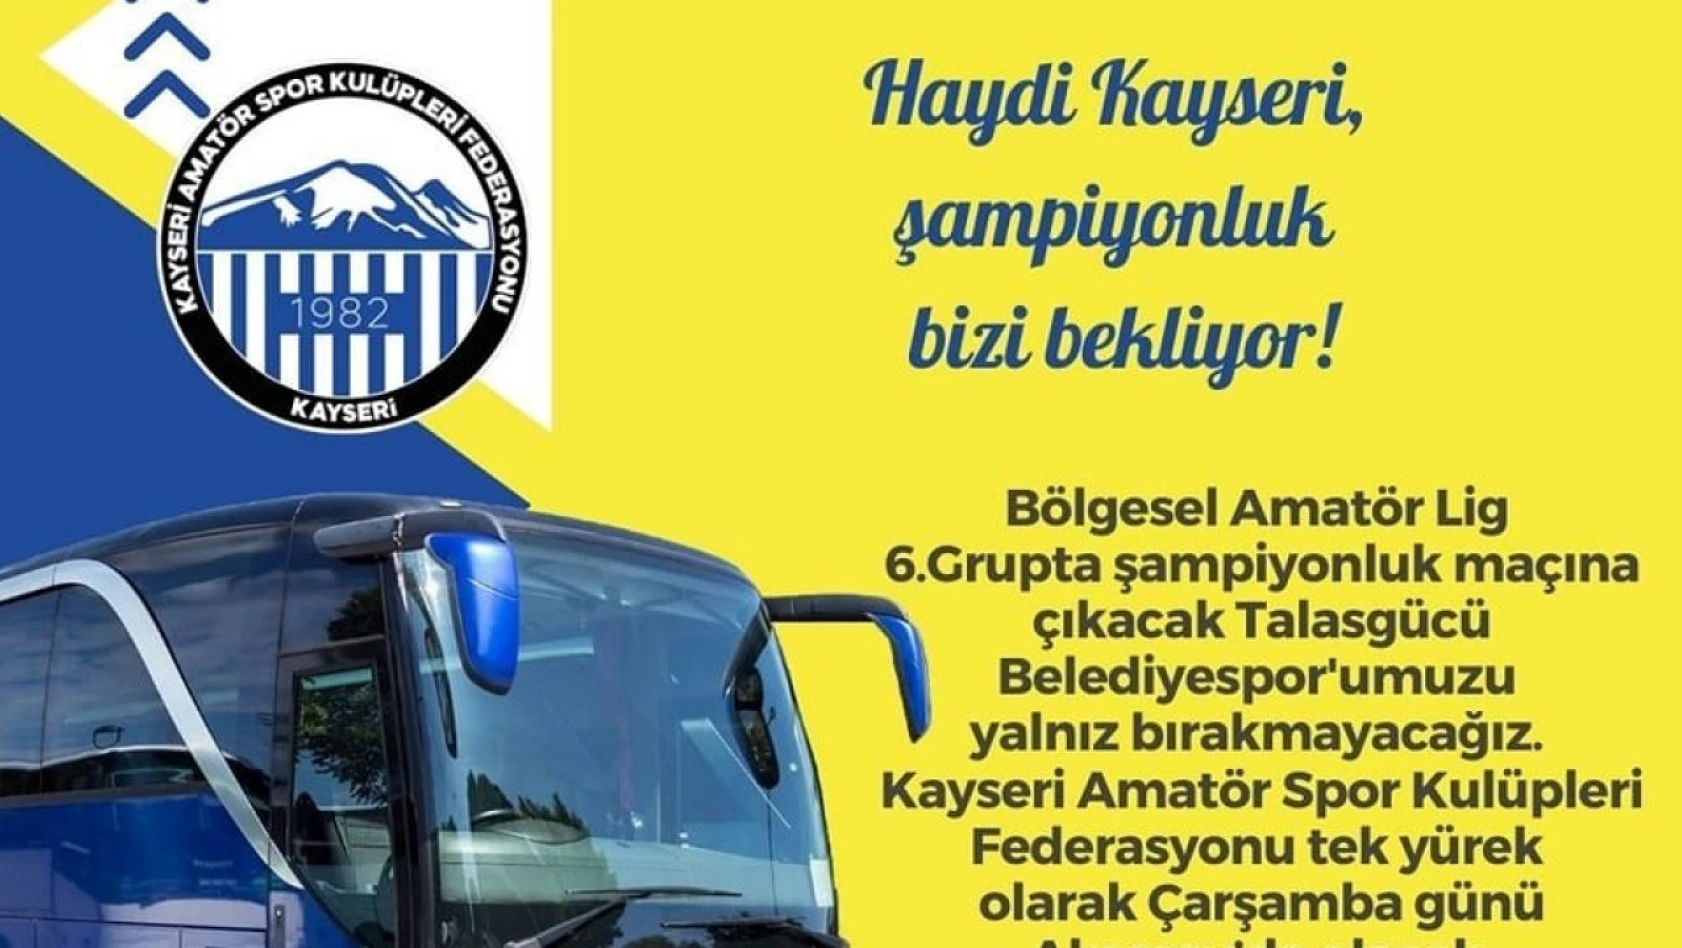 Kayseri ASKF Aksaray'a otobüs kaldıracak